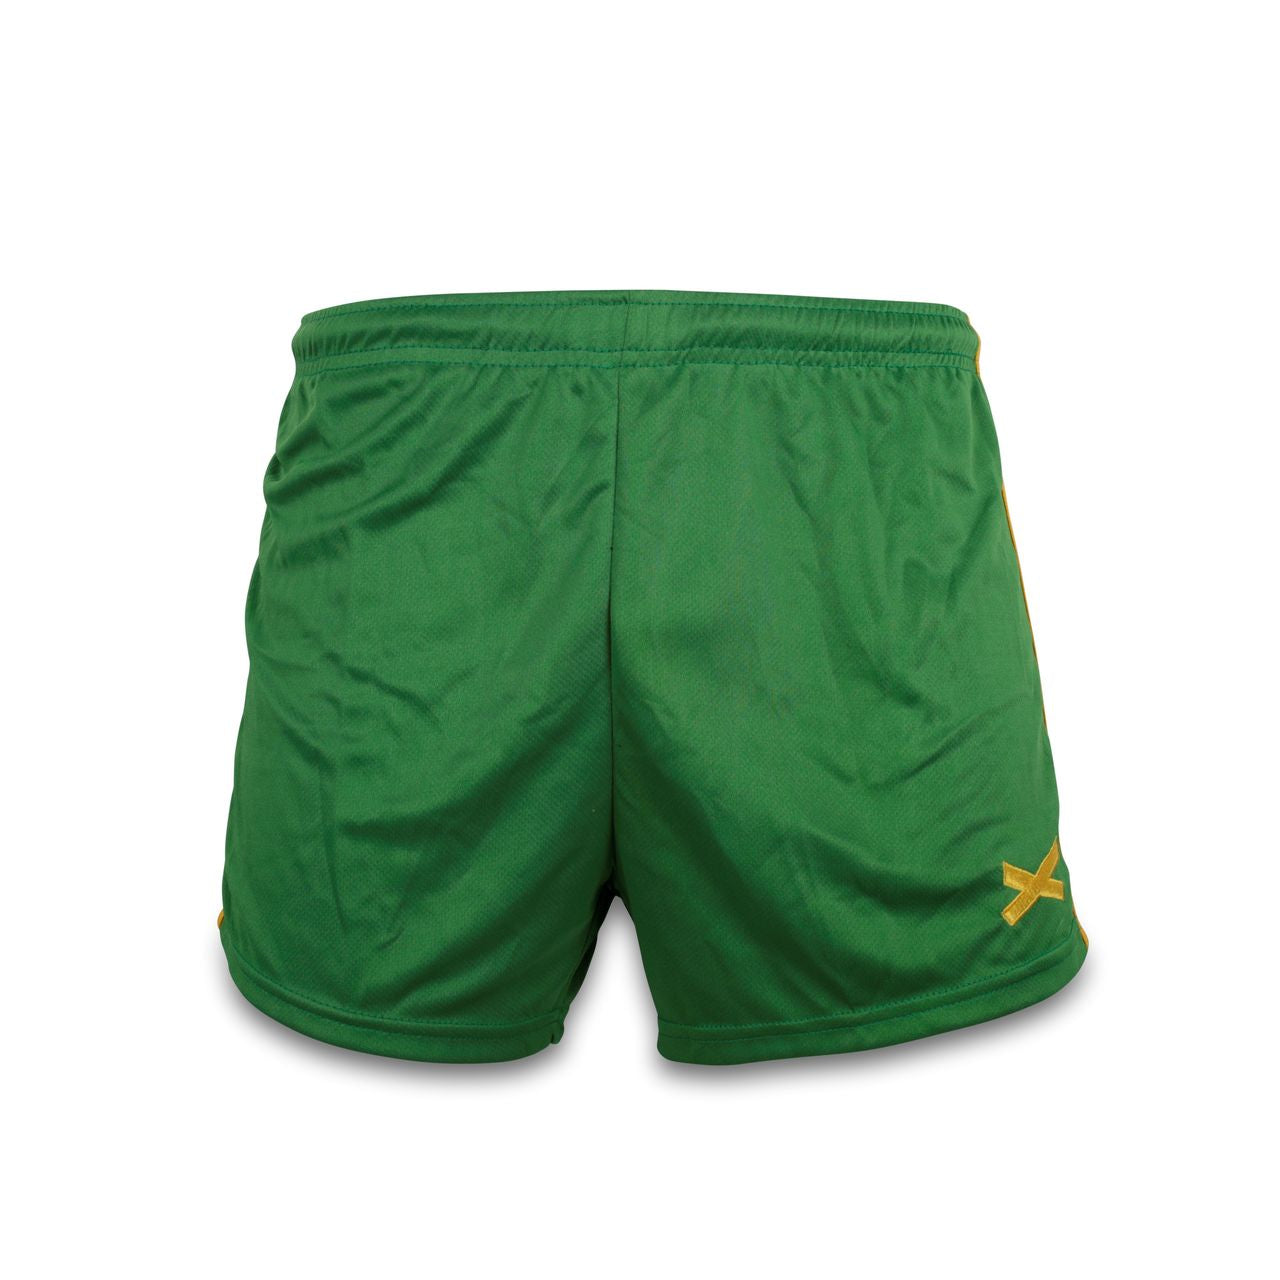 GAA Shorts Green with Yellow Stripes Gaelic Games Sportswear